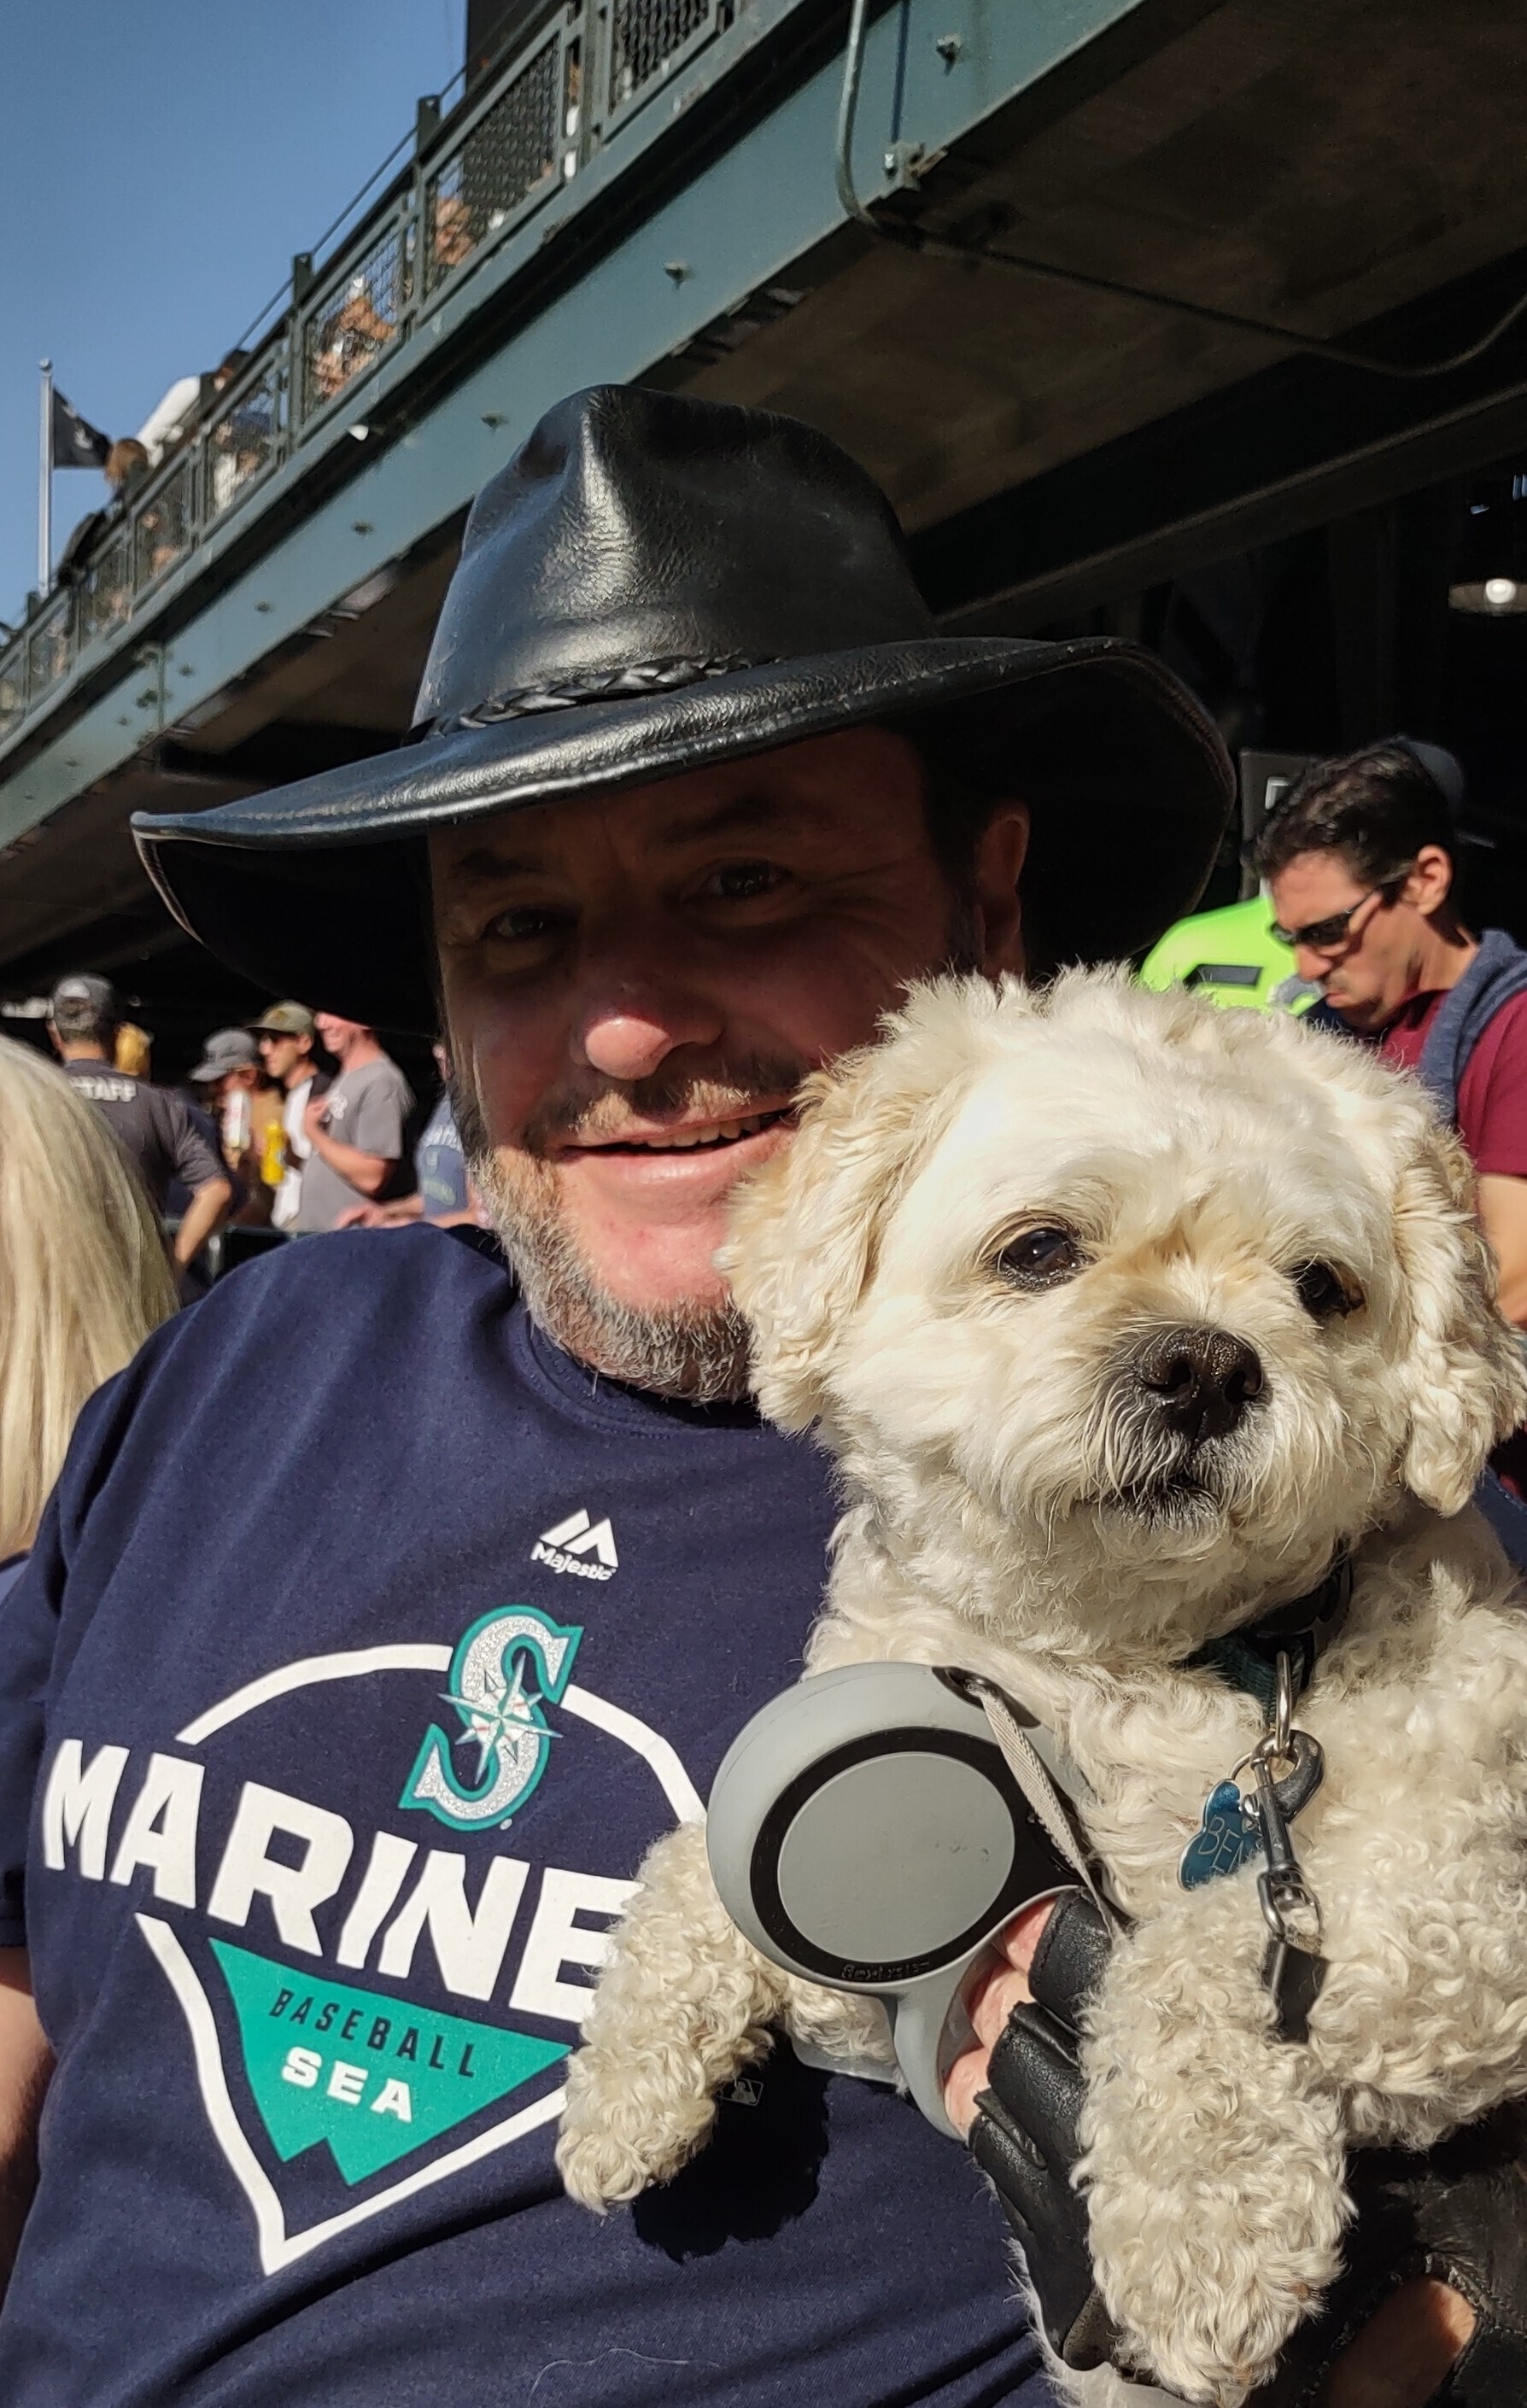 Seattle Mariners Dog 